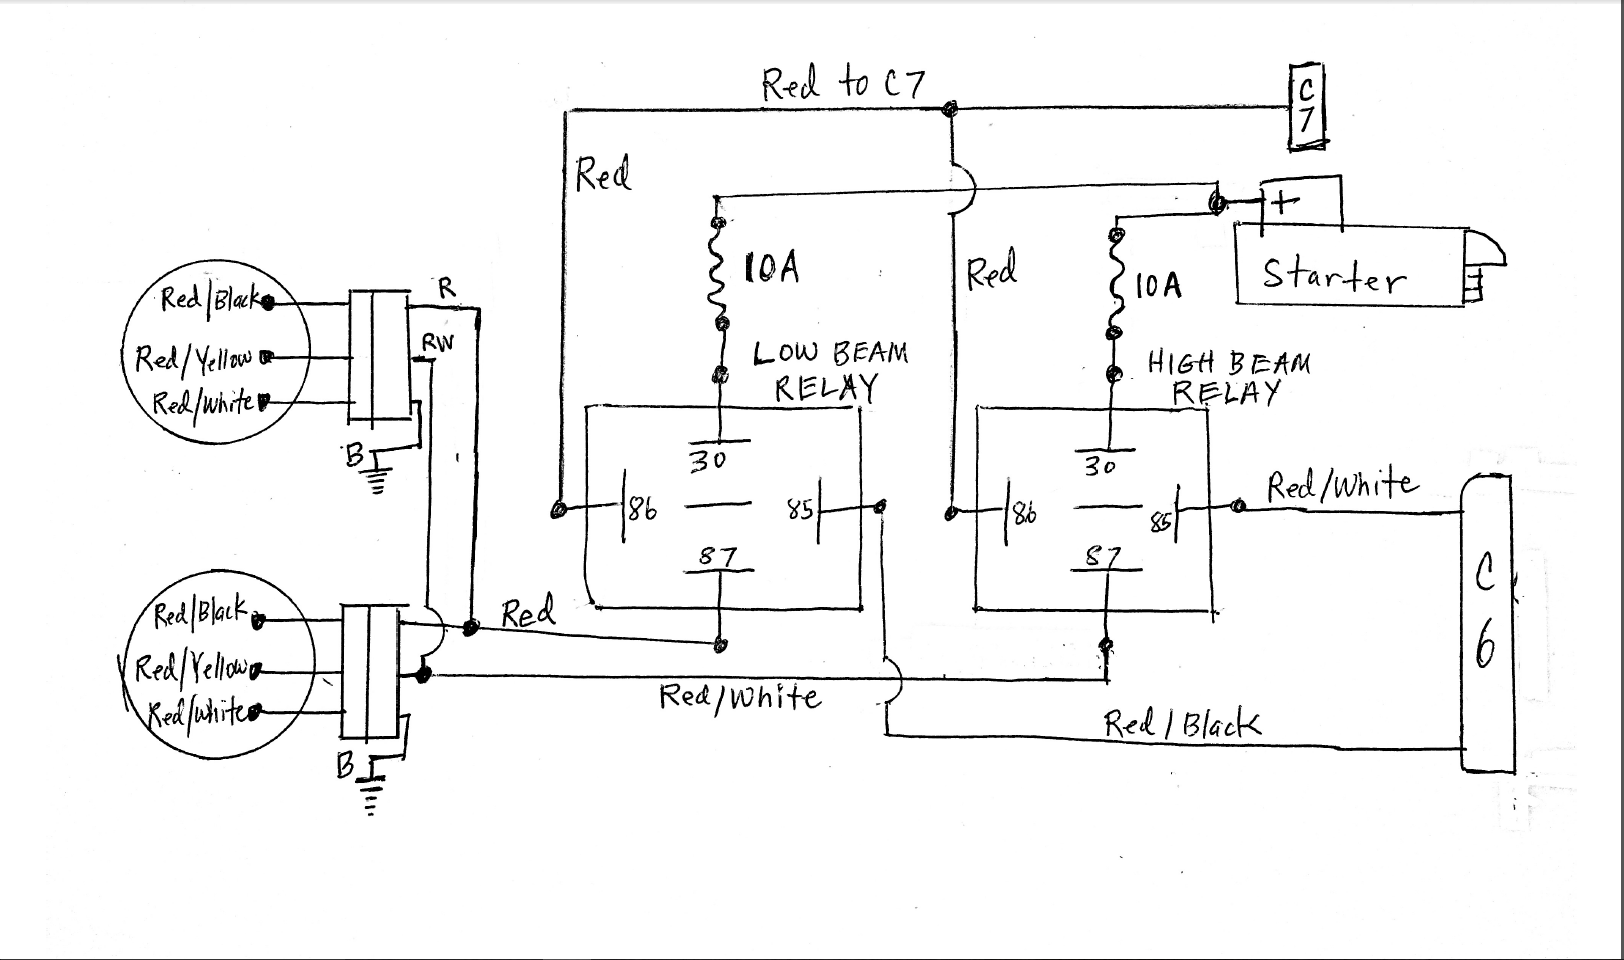 Datsun 240z Wiring Diagram